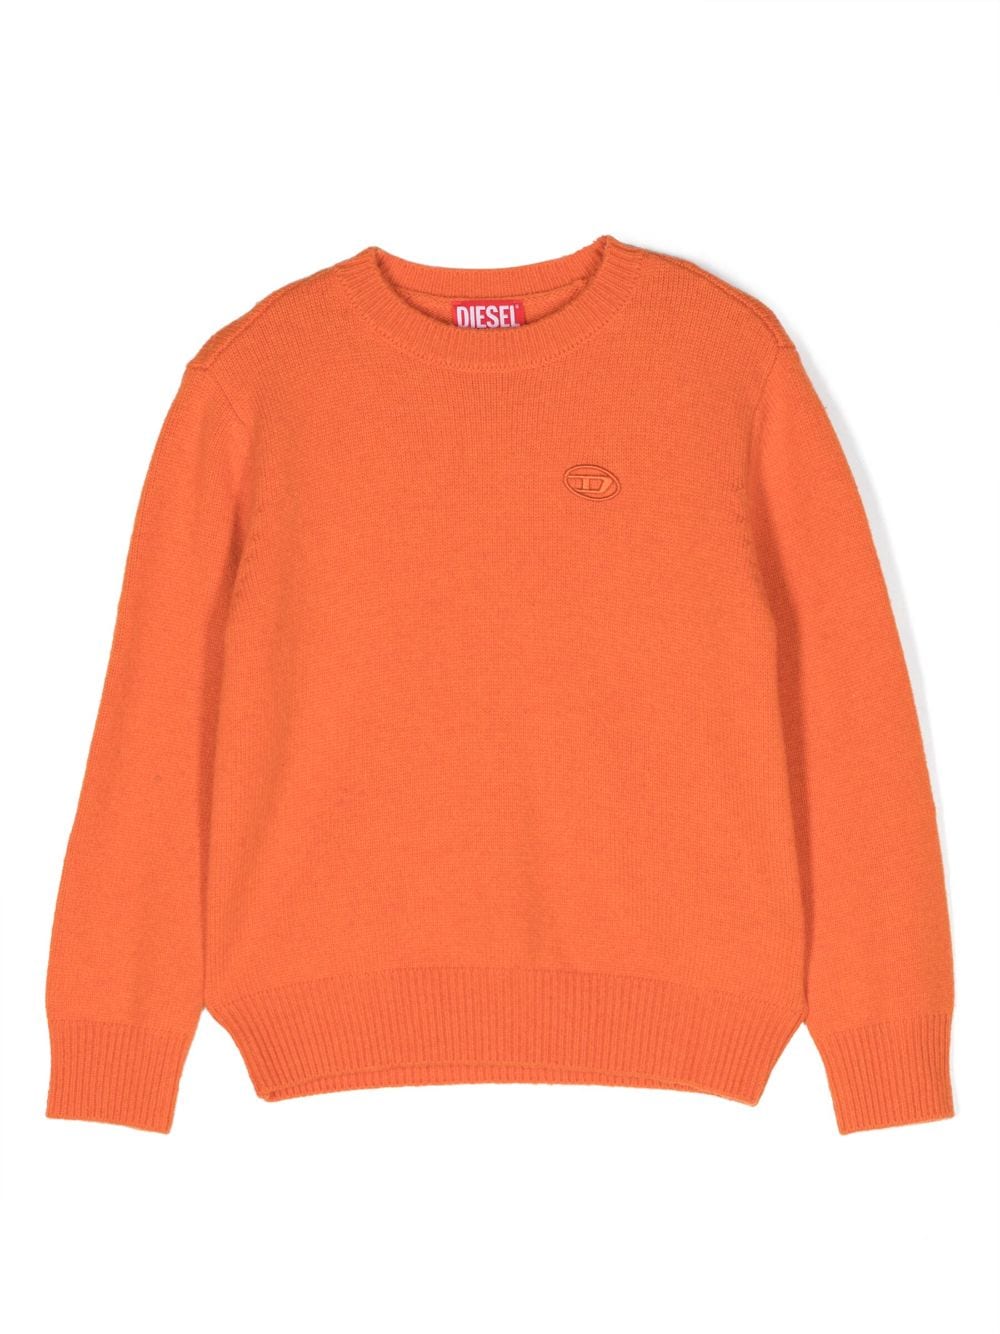 Chemise orange avec logo brodé